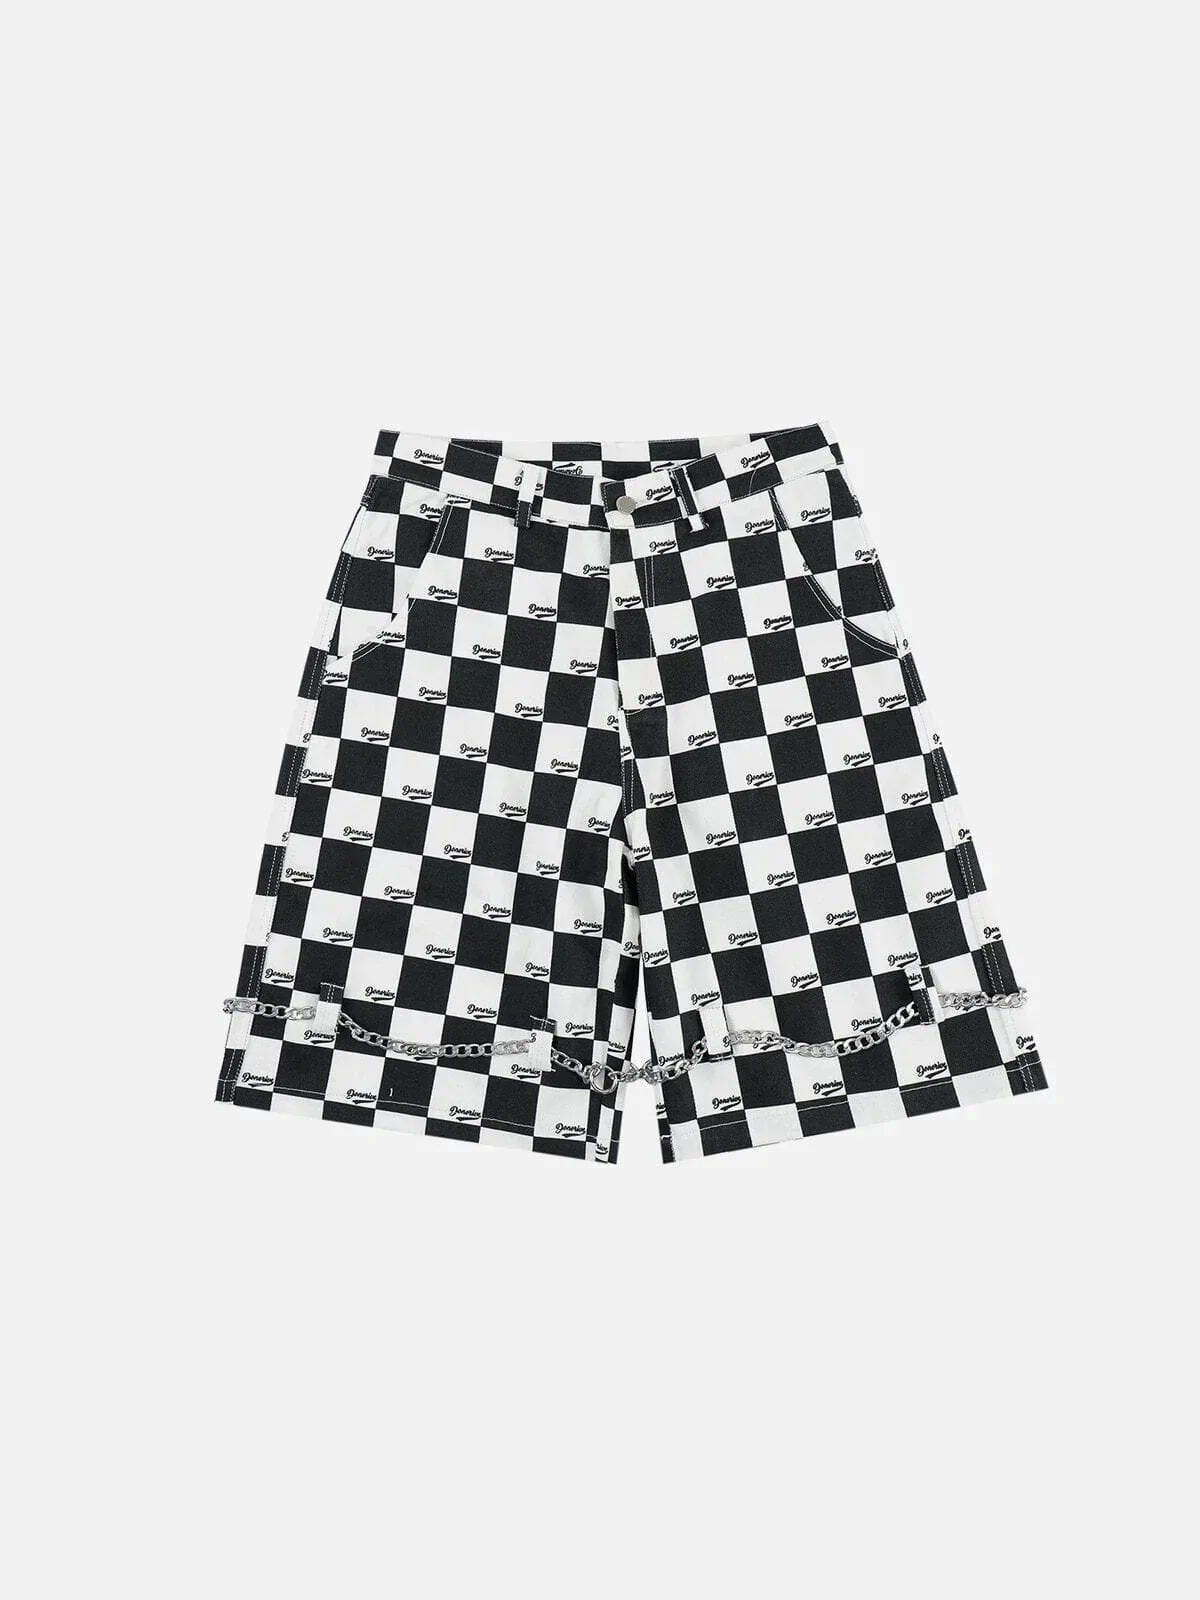 plaid chain shorts edgy & trendy streetwear 5905